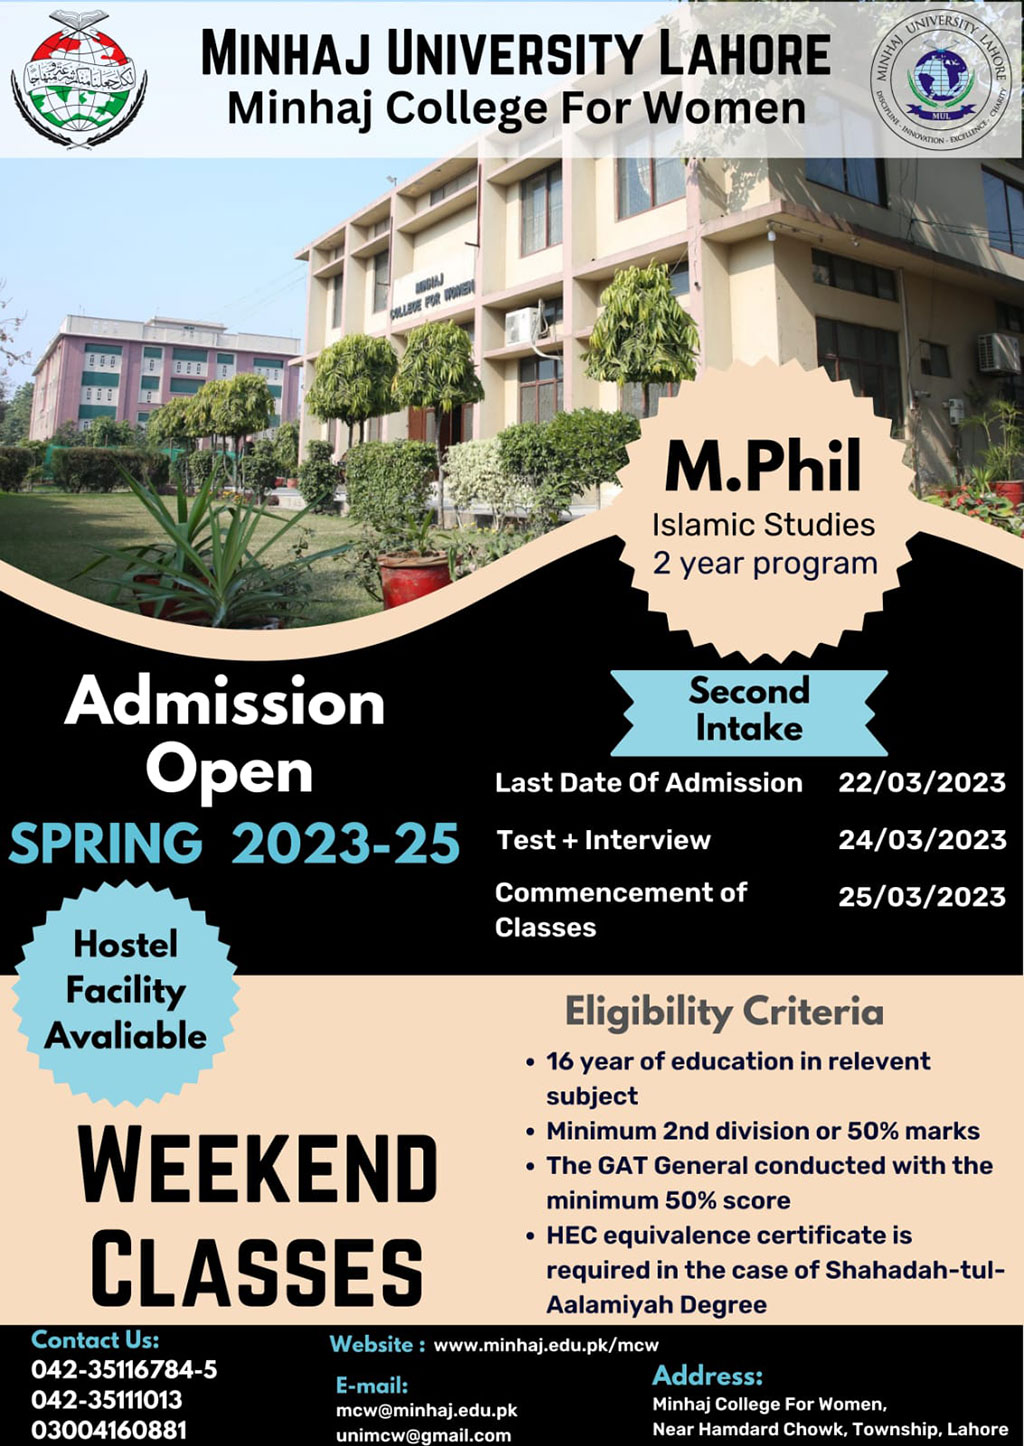 Minhaj College for women - Admission Open